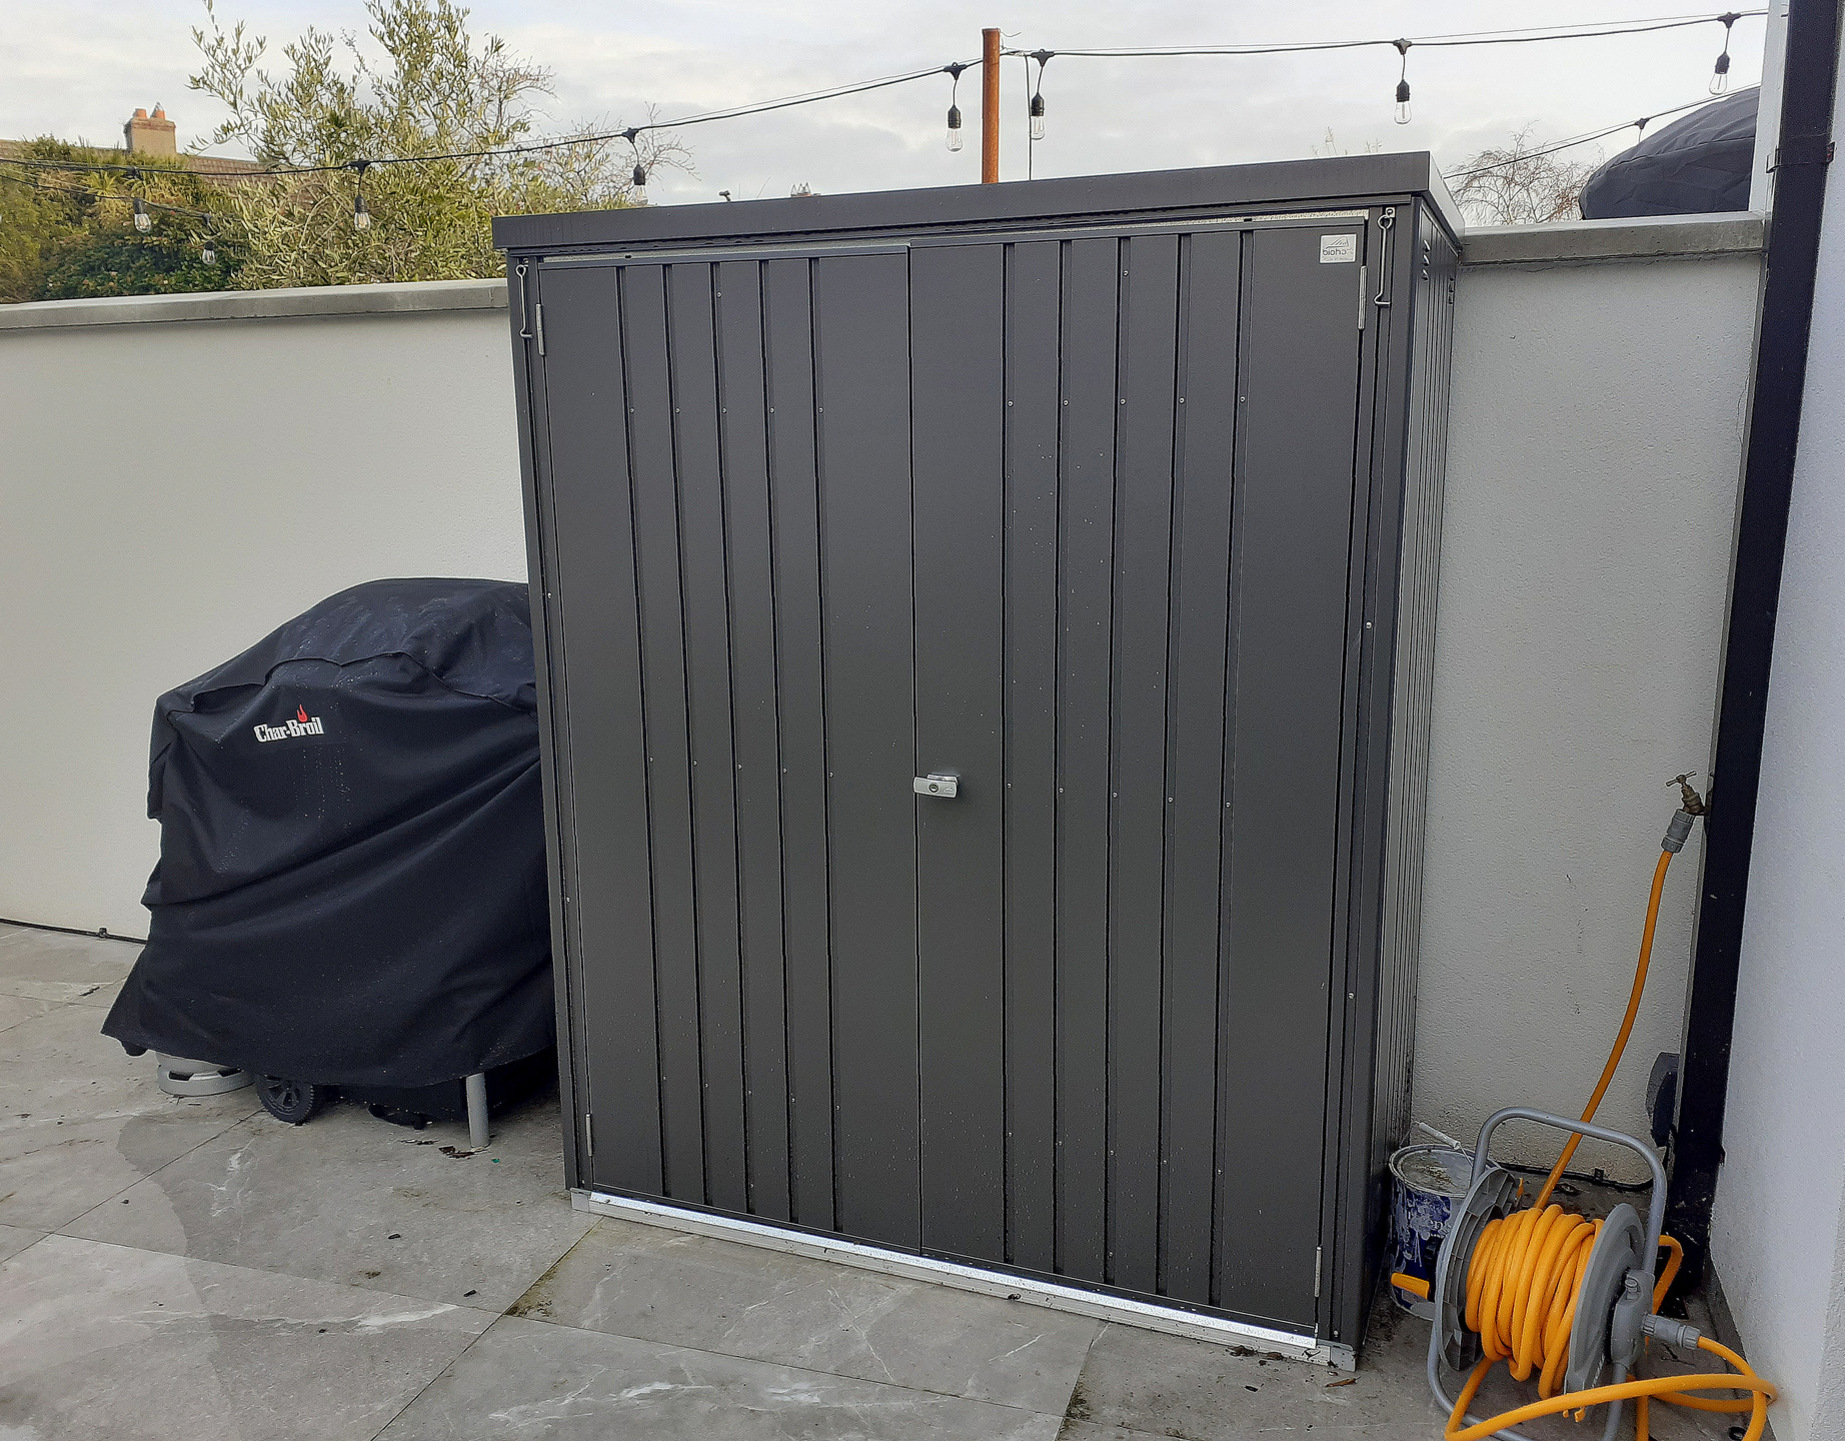 Biohort Equipment Locker 150 in metallic dark grey, supplied + fitted in Goatstown, Dublin 18 | Stylish, Versatile, Secure & Rainproof Patio Storage Solutions | FREE Fitting